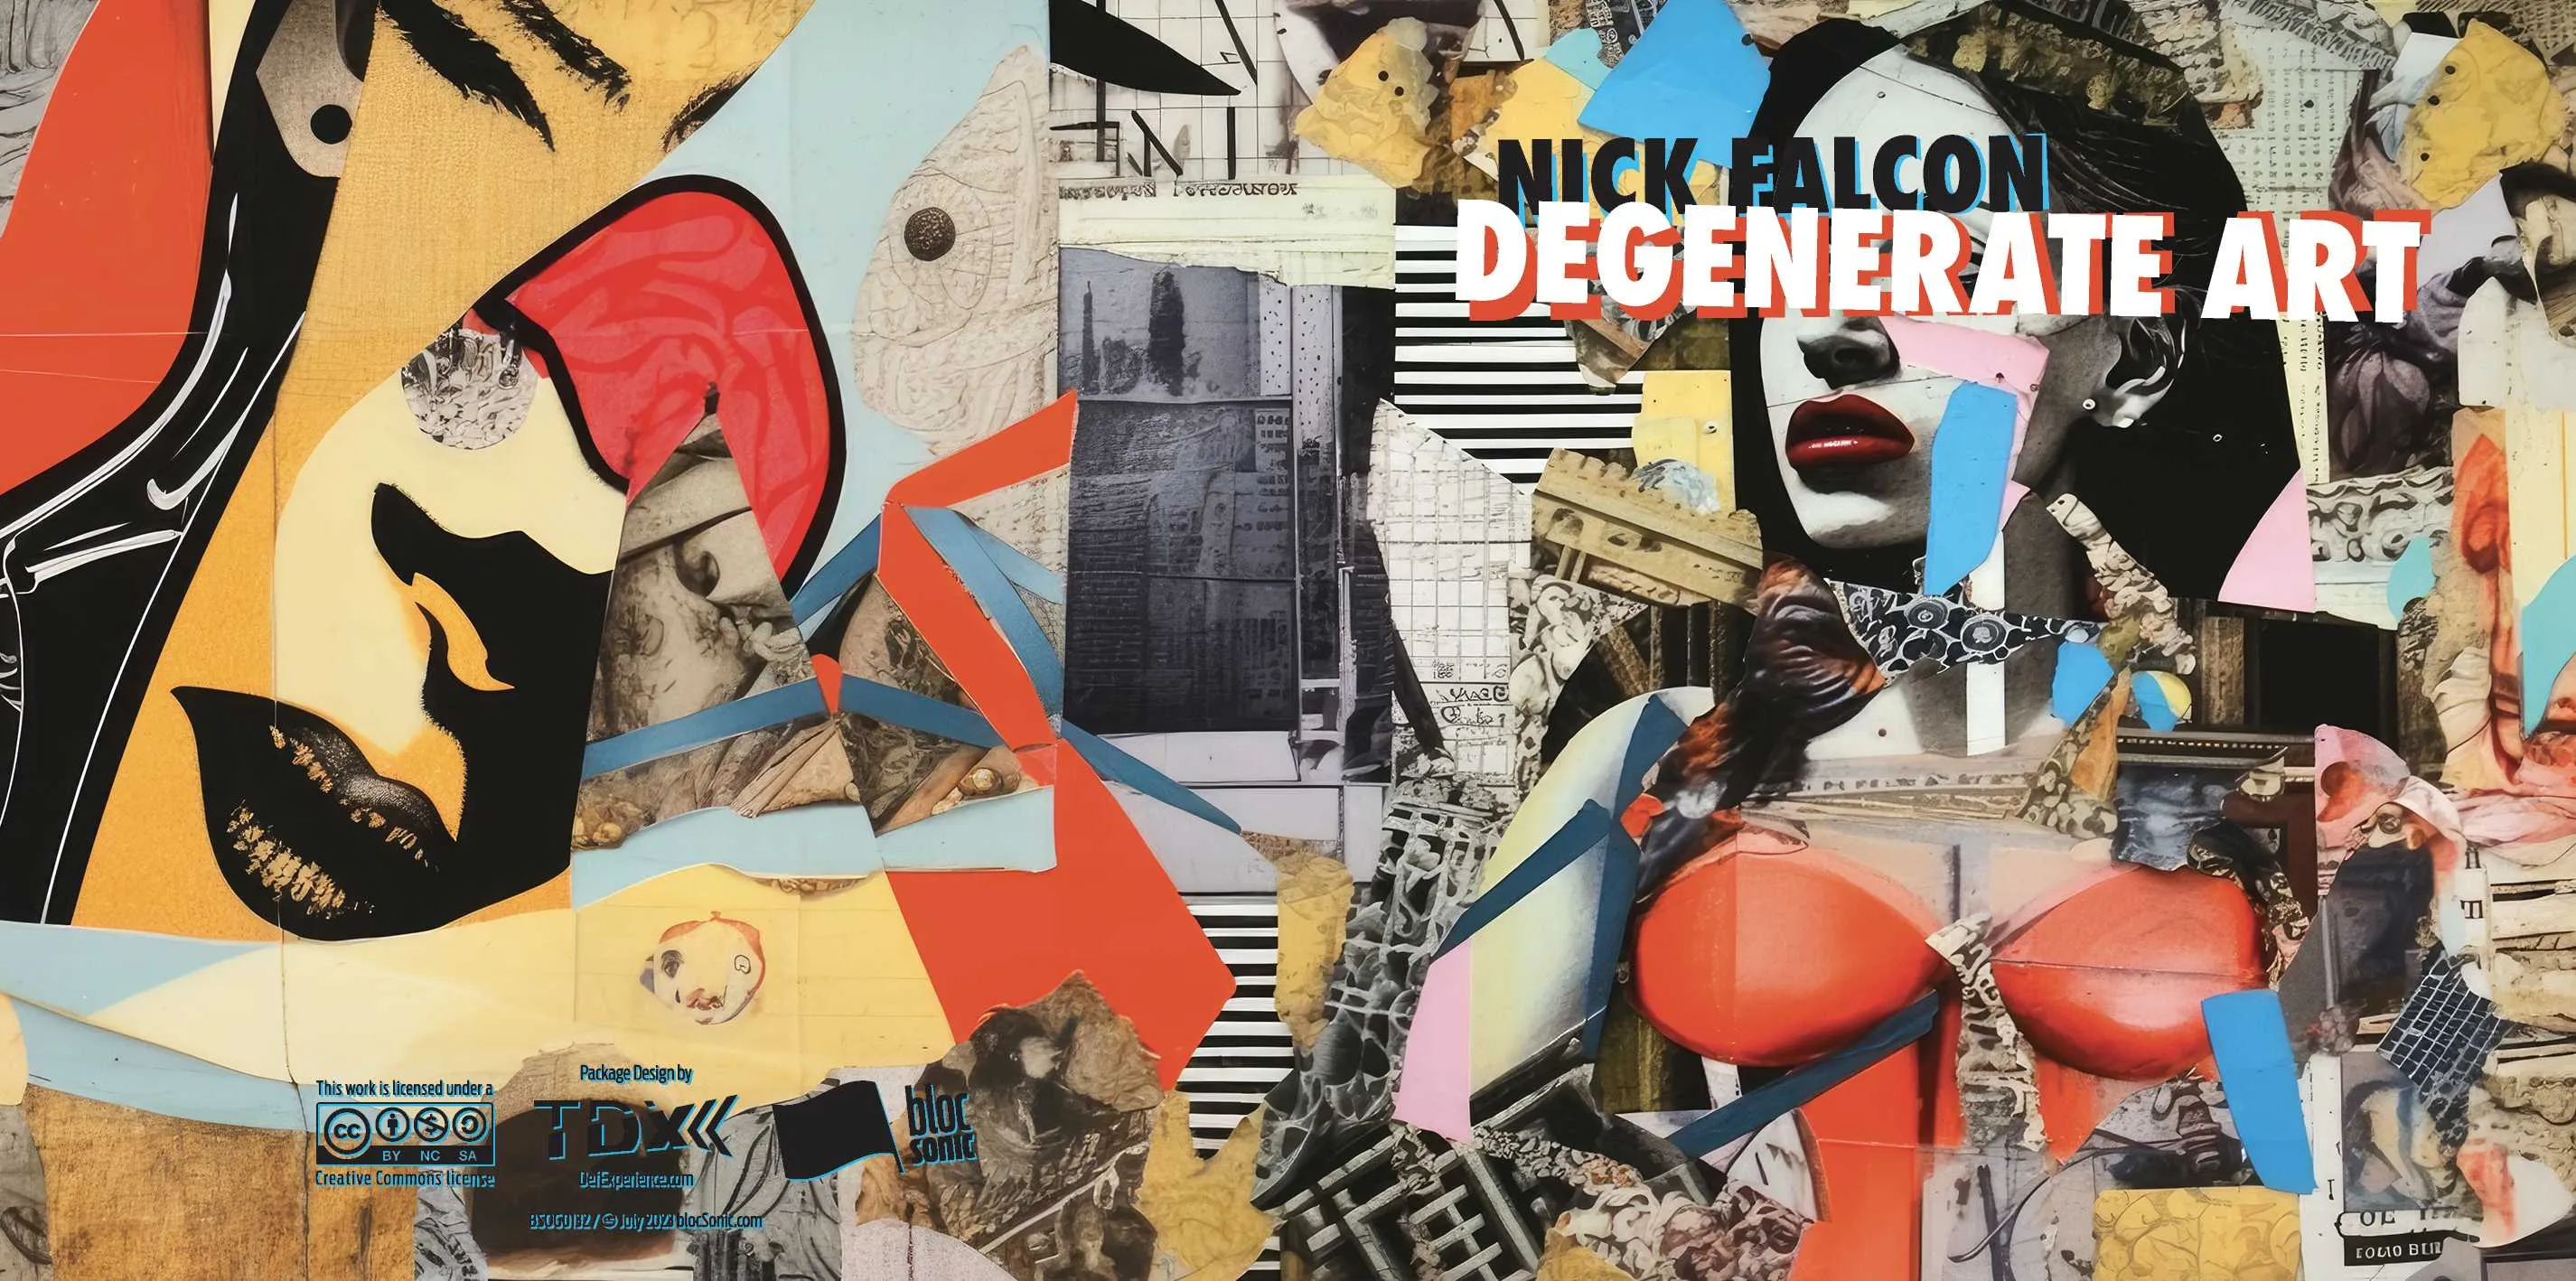 Album insert for “Degenerate Art” by Nick Falcon